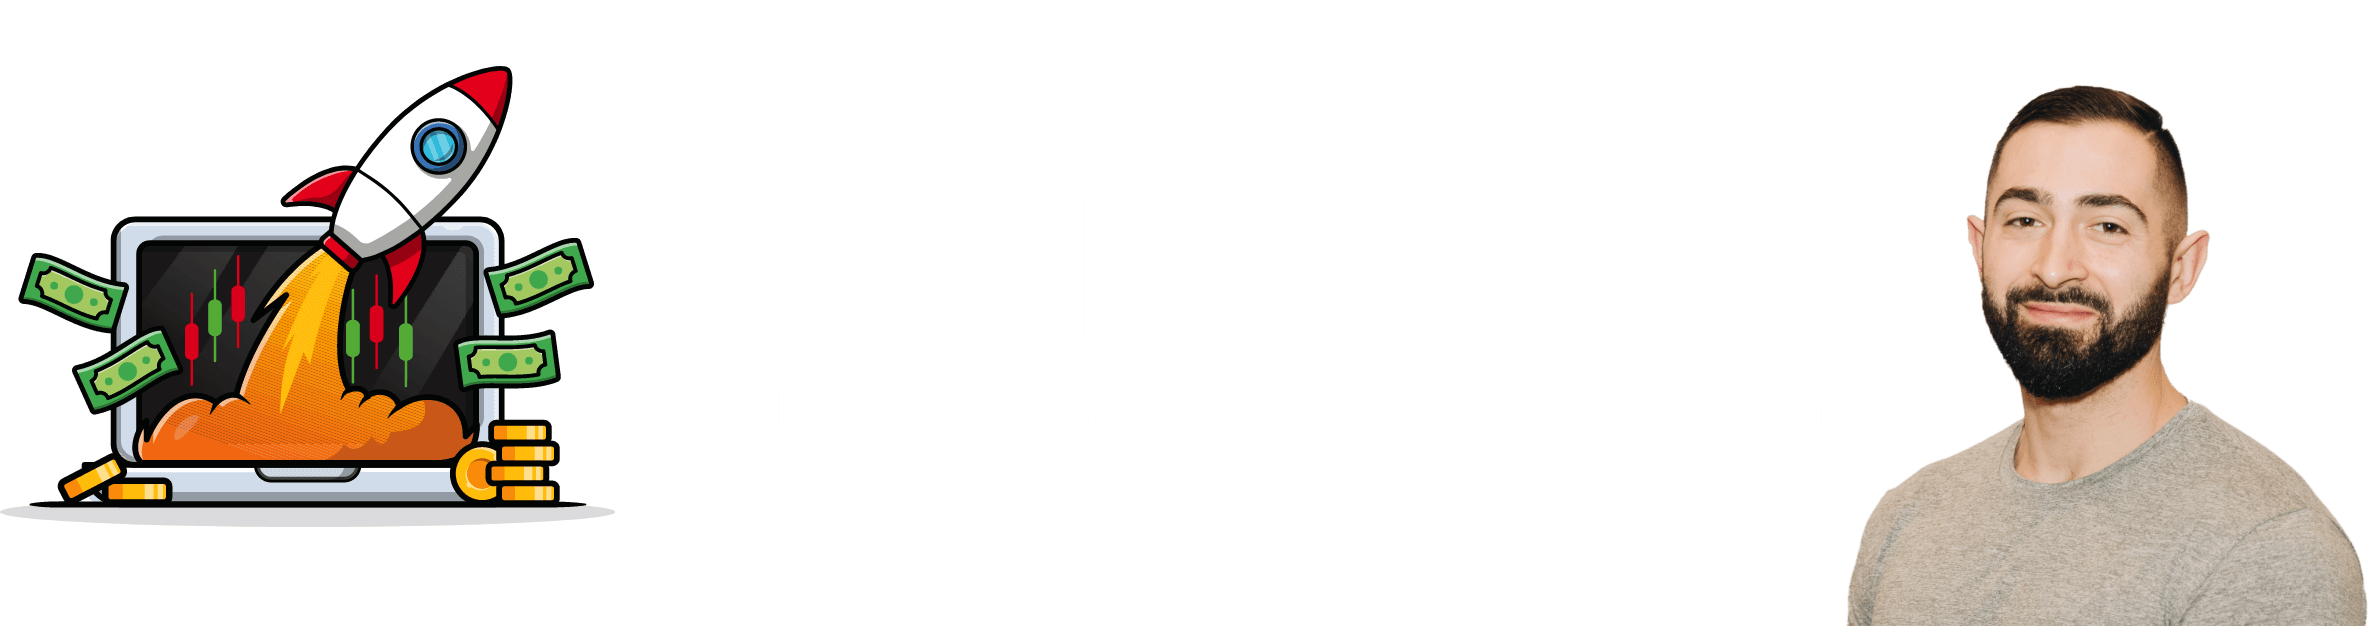 focused-trades-logo-w-taylor